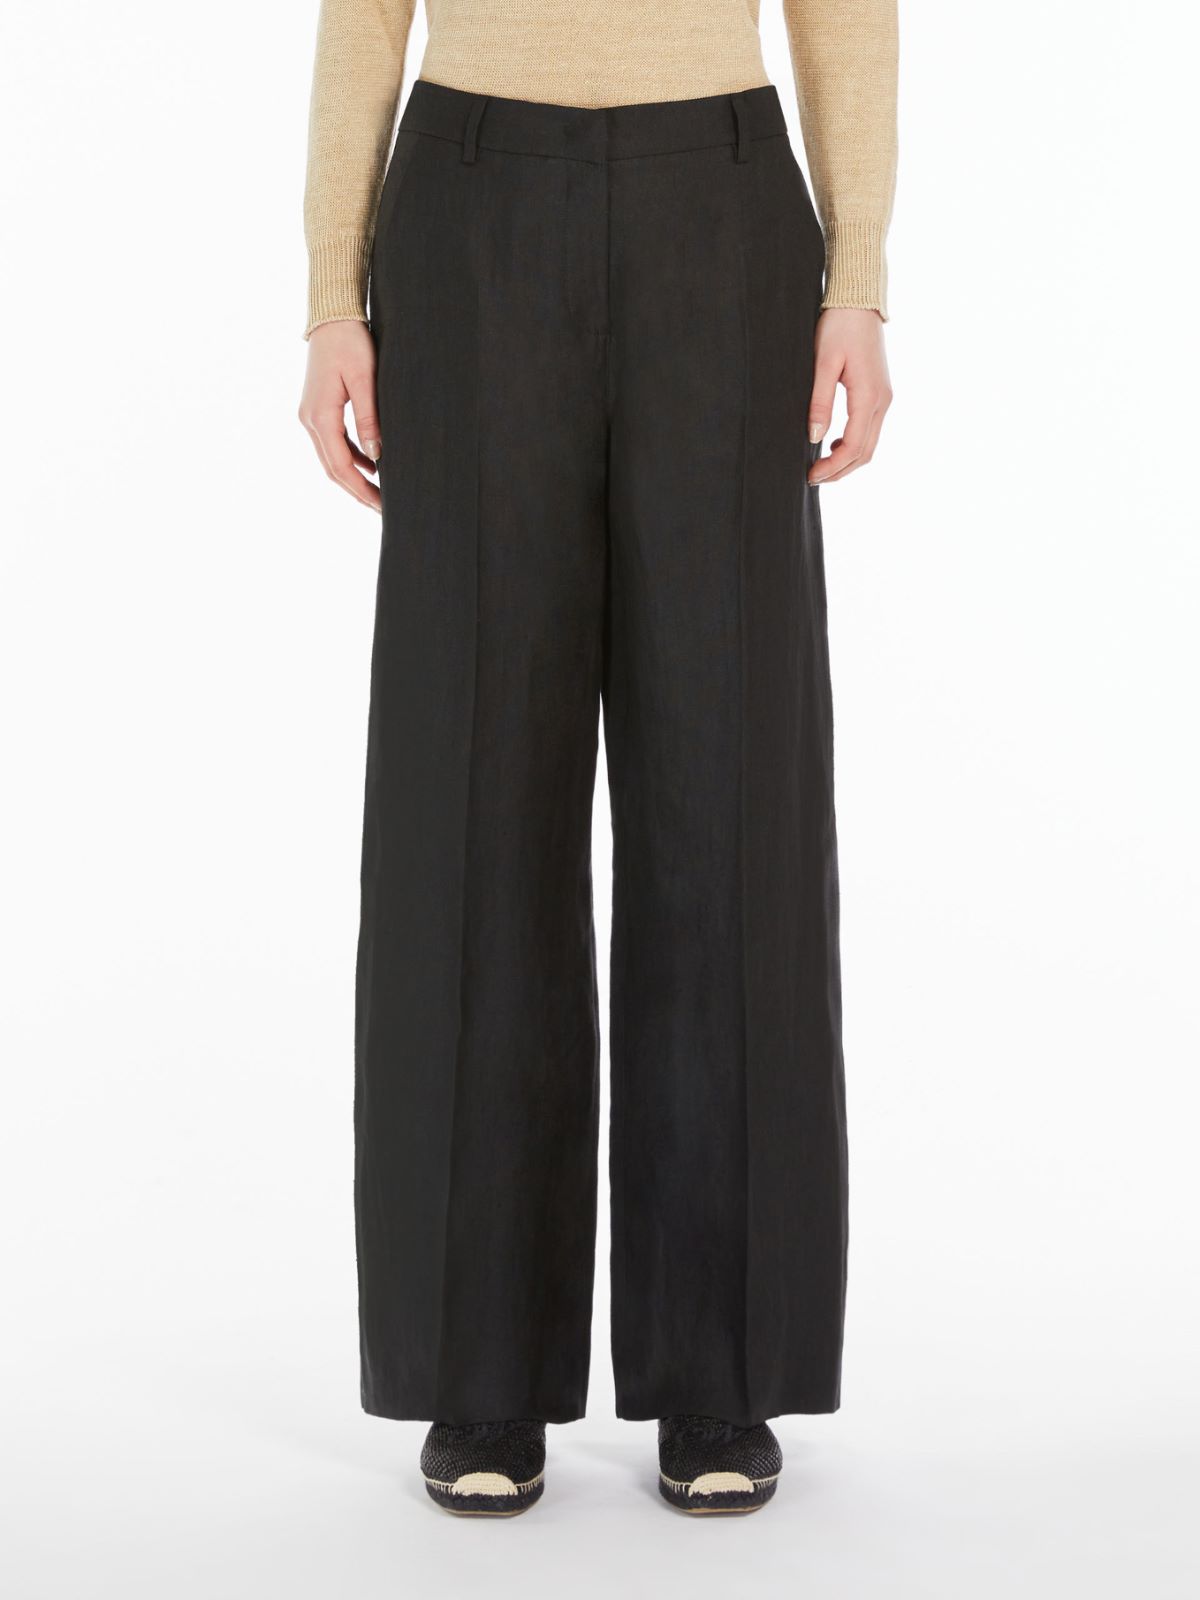 Linen canvas trousers, black | Weekend Max Mara